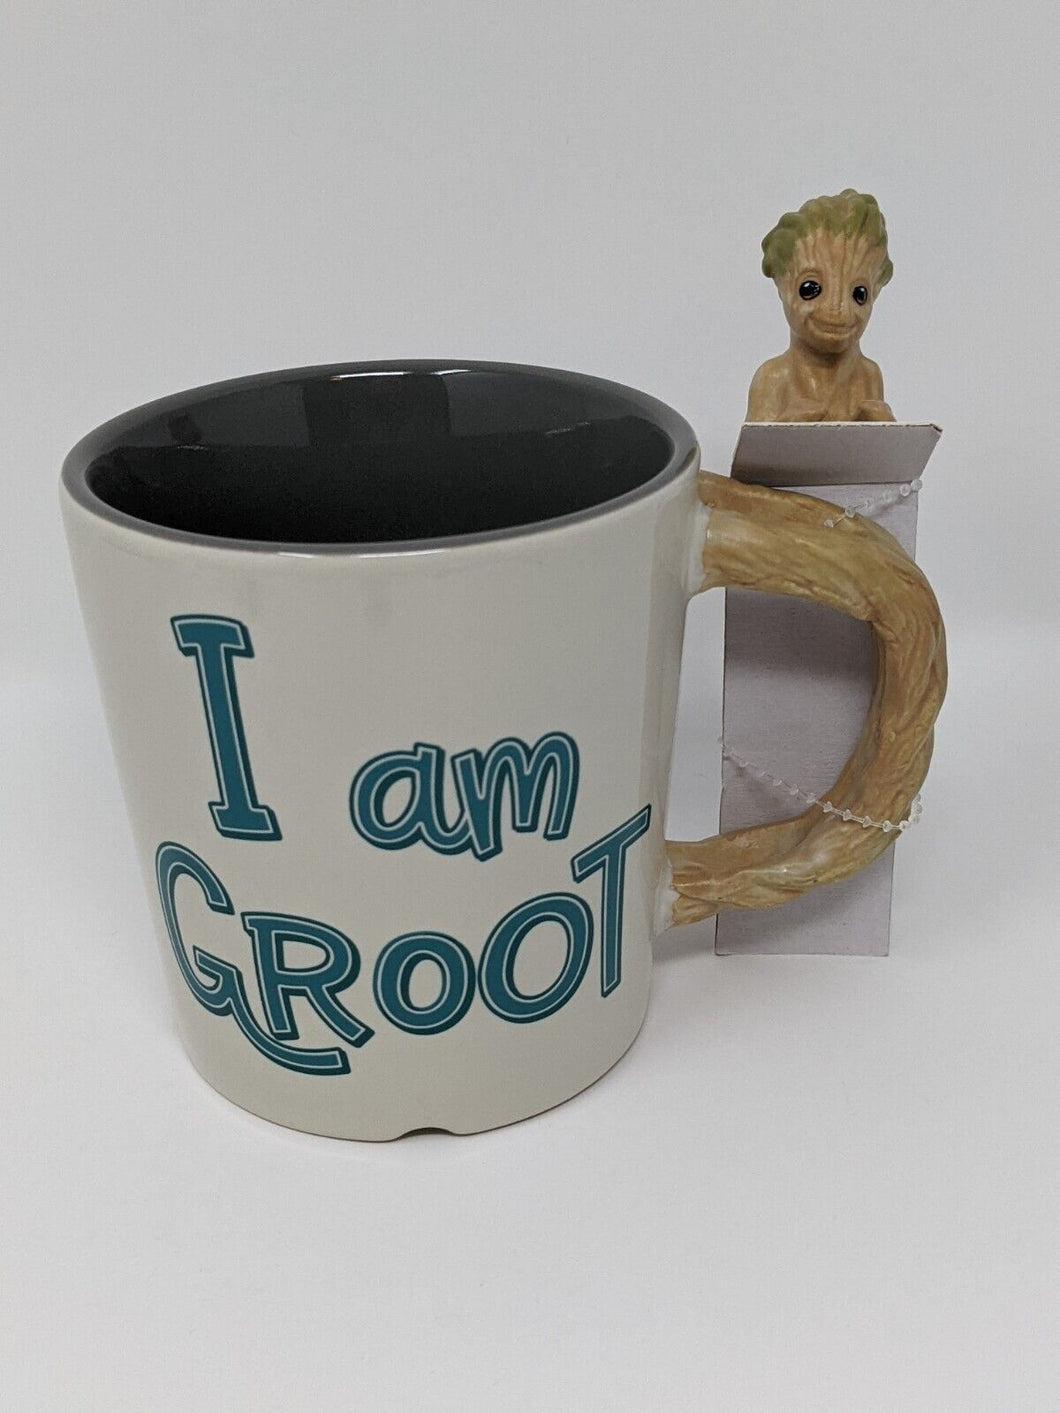 Marvel Comics: I am Groot - Tasse [315 ml] - Thali